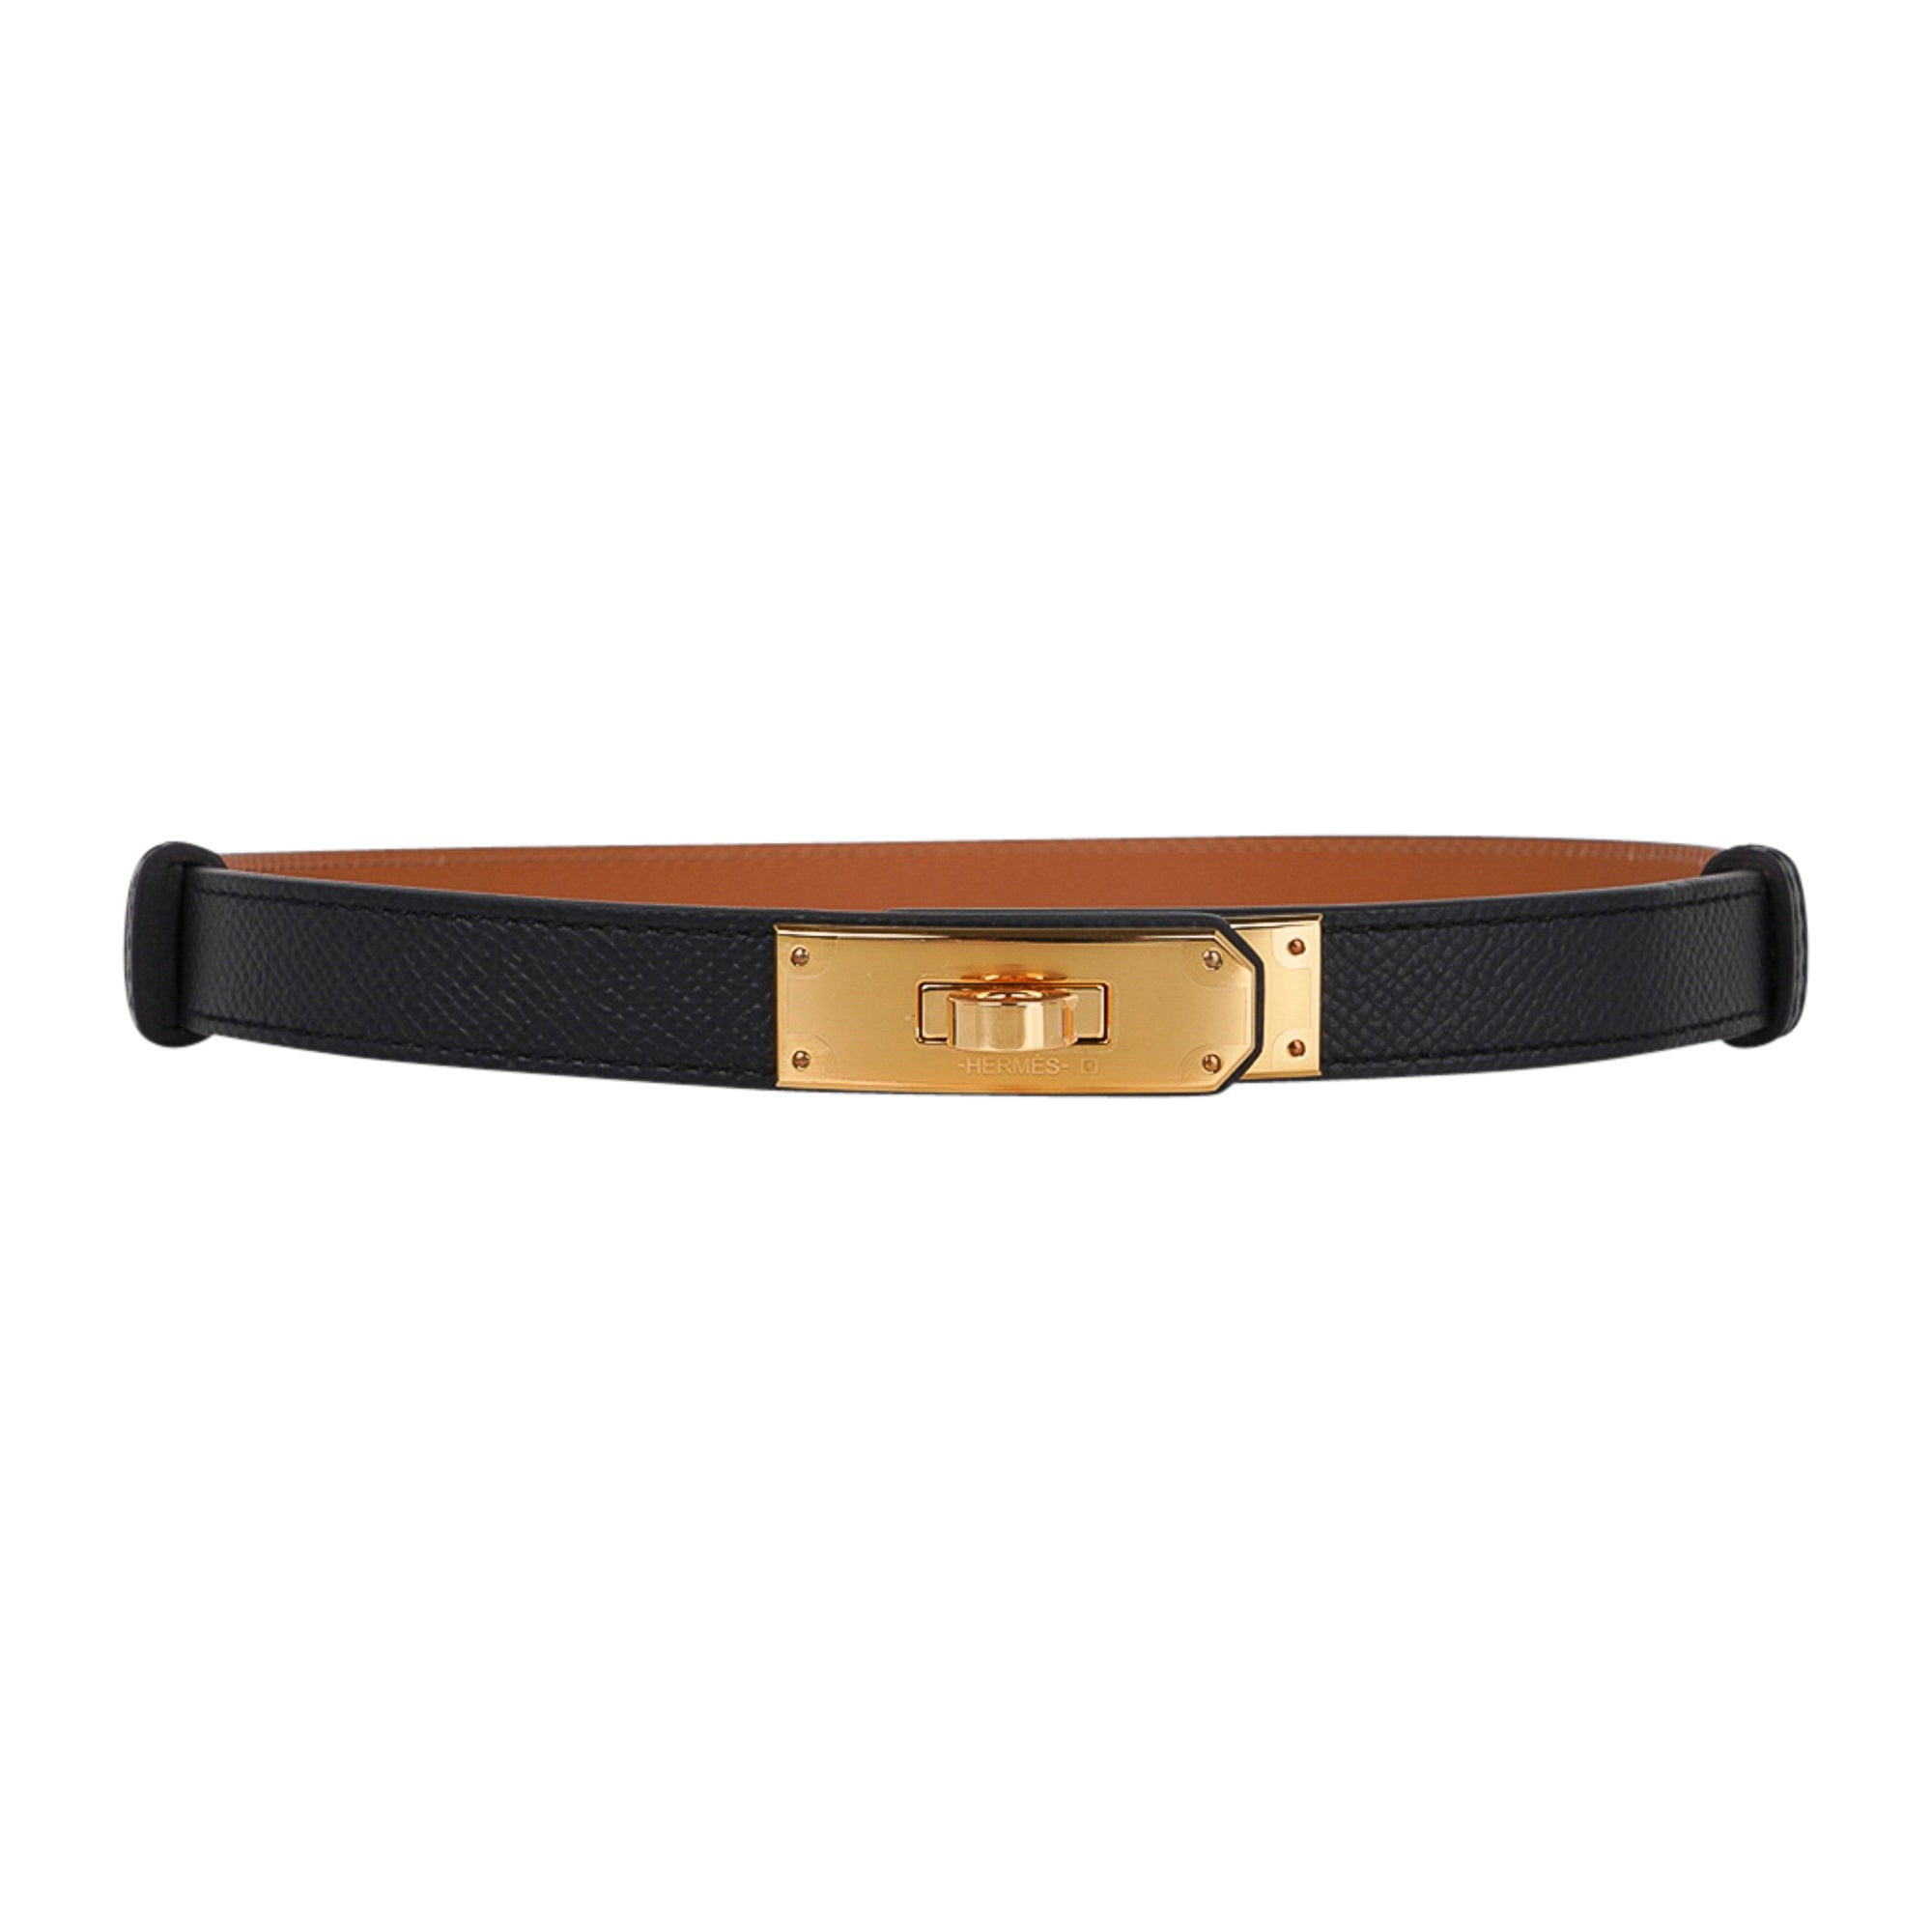 NEW HERMES Etoupe Epsom GHW Kelly 18 Belt One Size Adjustable